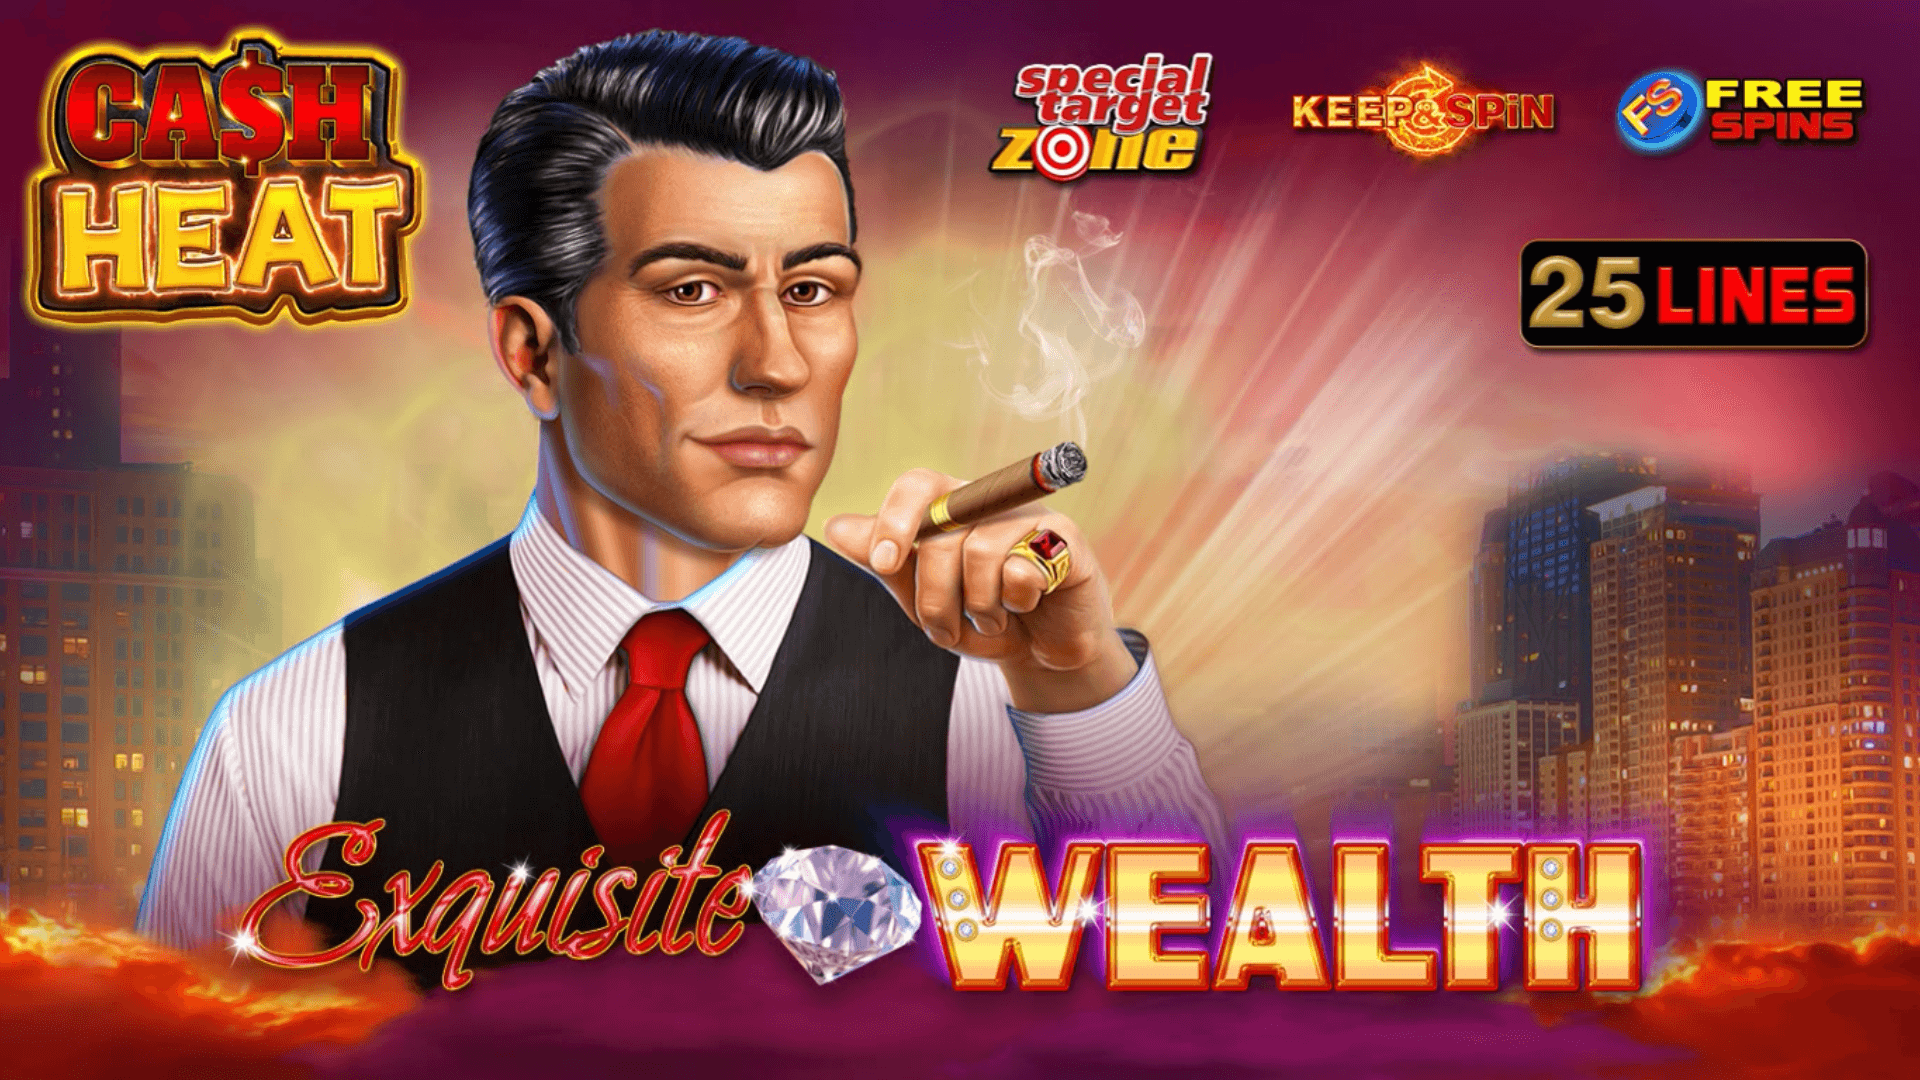 egt games general series bonus prize general exquisite wealth cash heat 2